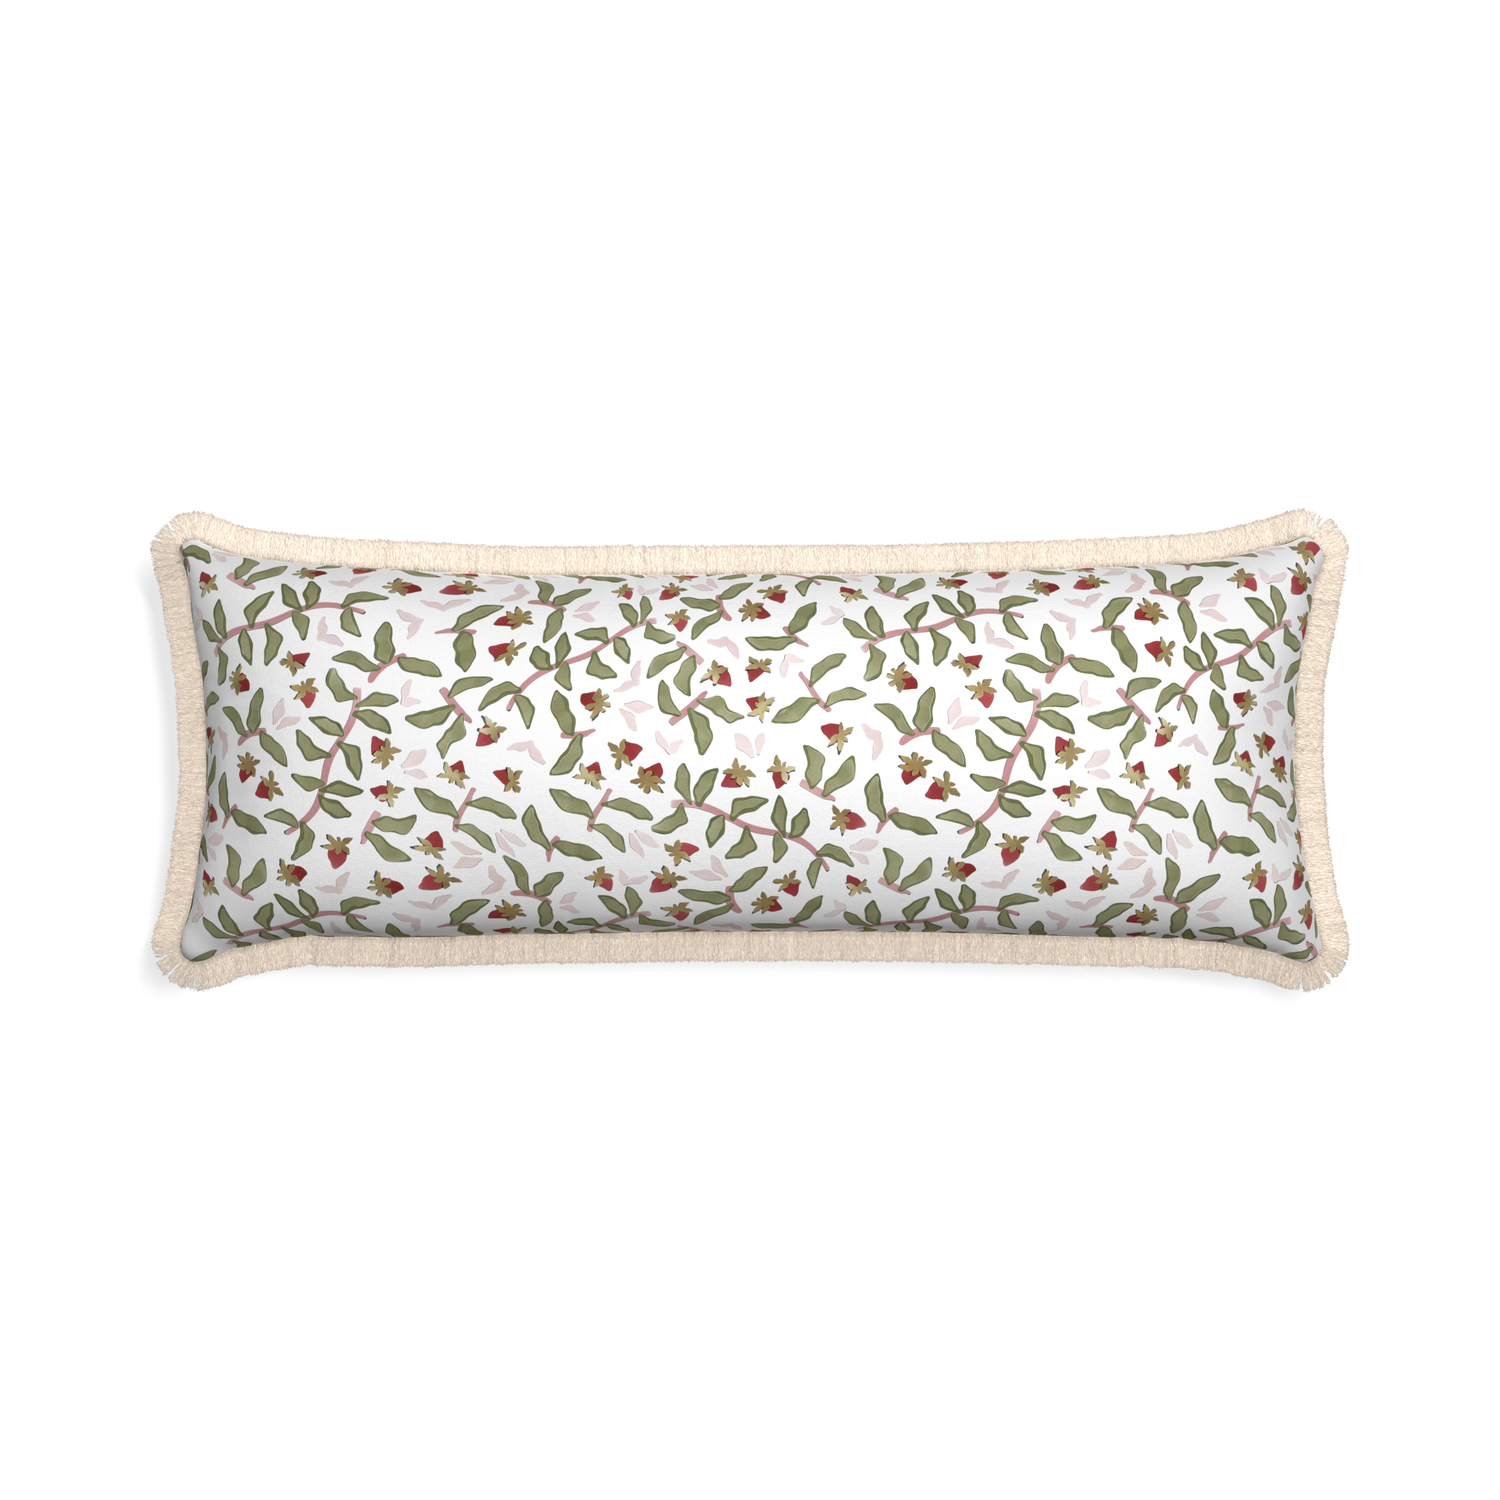 Xl-lumbar nellie custom pillow with cream fringe on white background